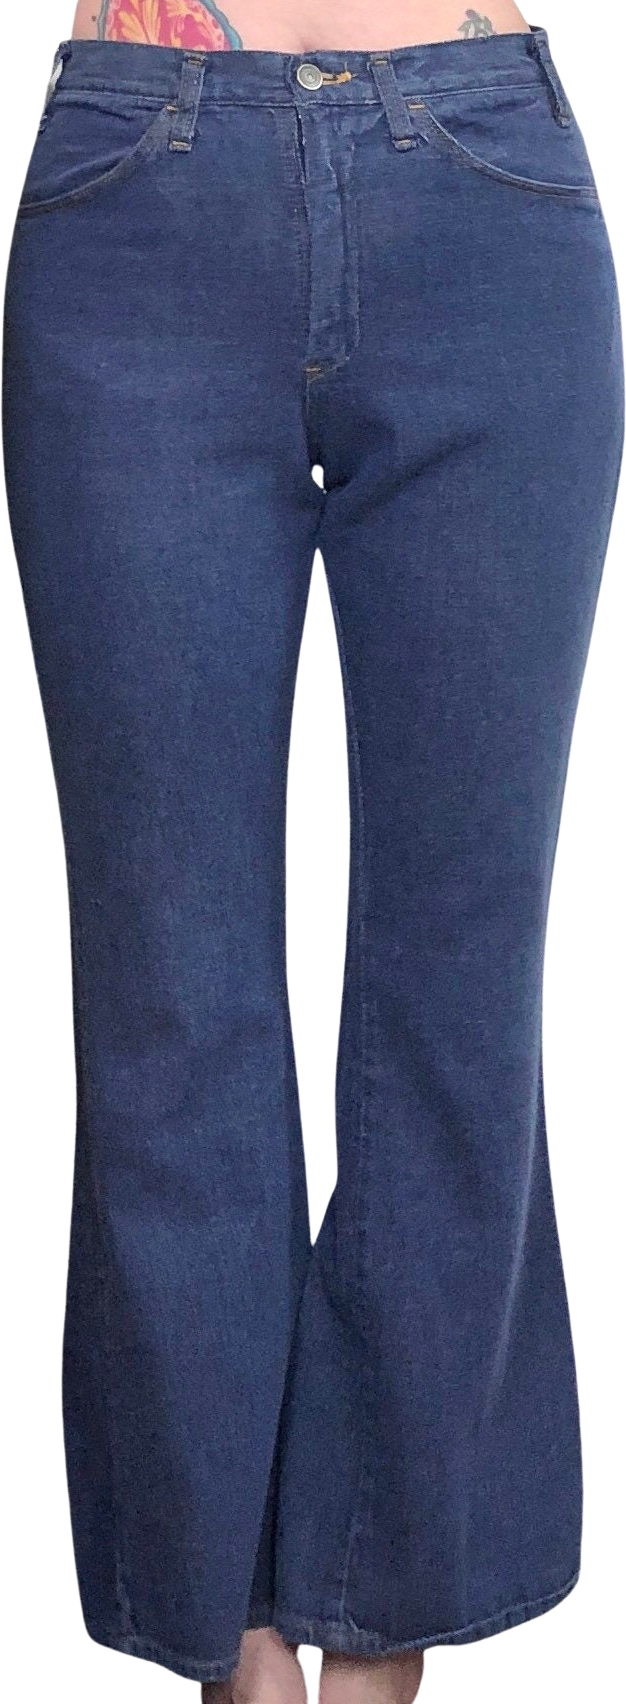 Vintage Flare Jeans 70s High Waisted Flares In Soft Dark Denim Size M-L (30  31)